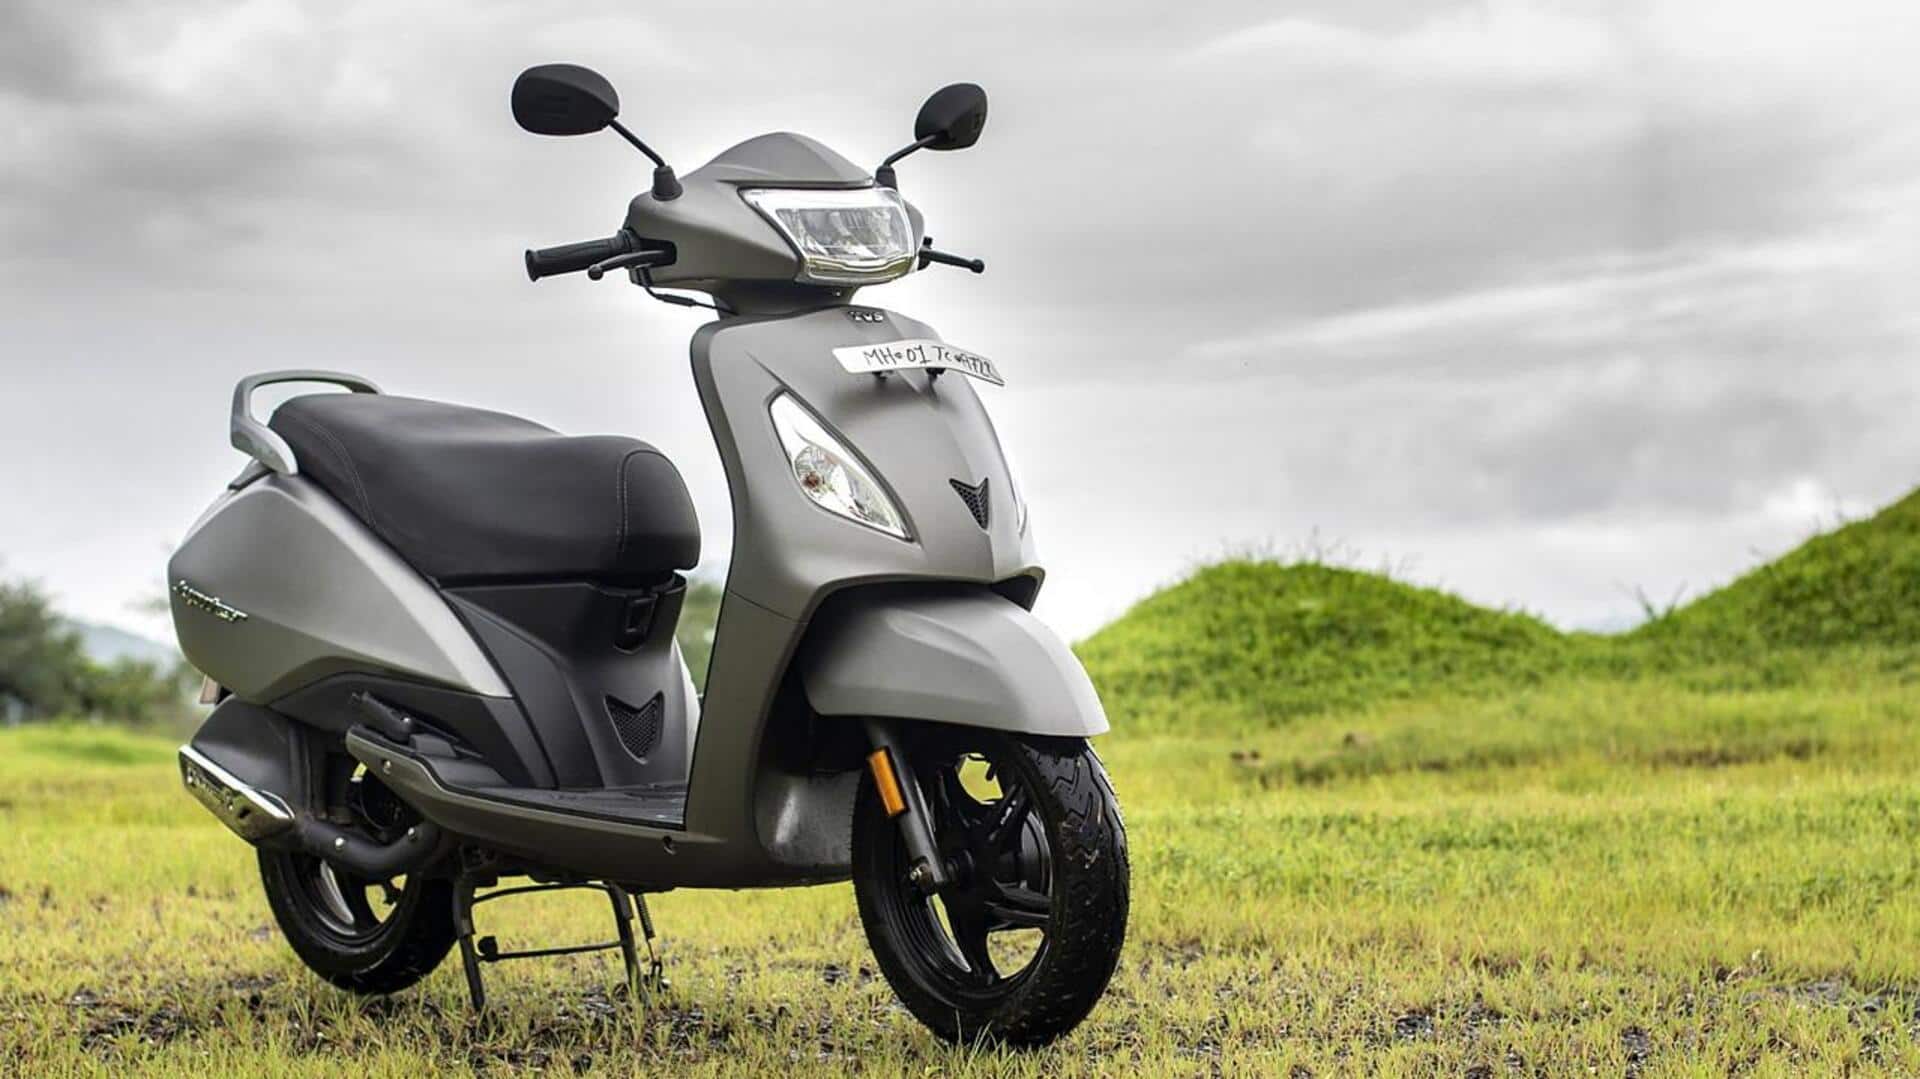 Jupiter scooter is TVS Motor Company's highest-selling model in October